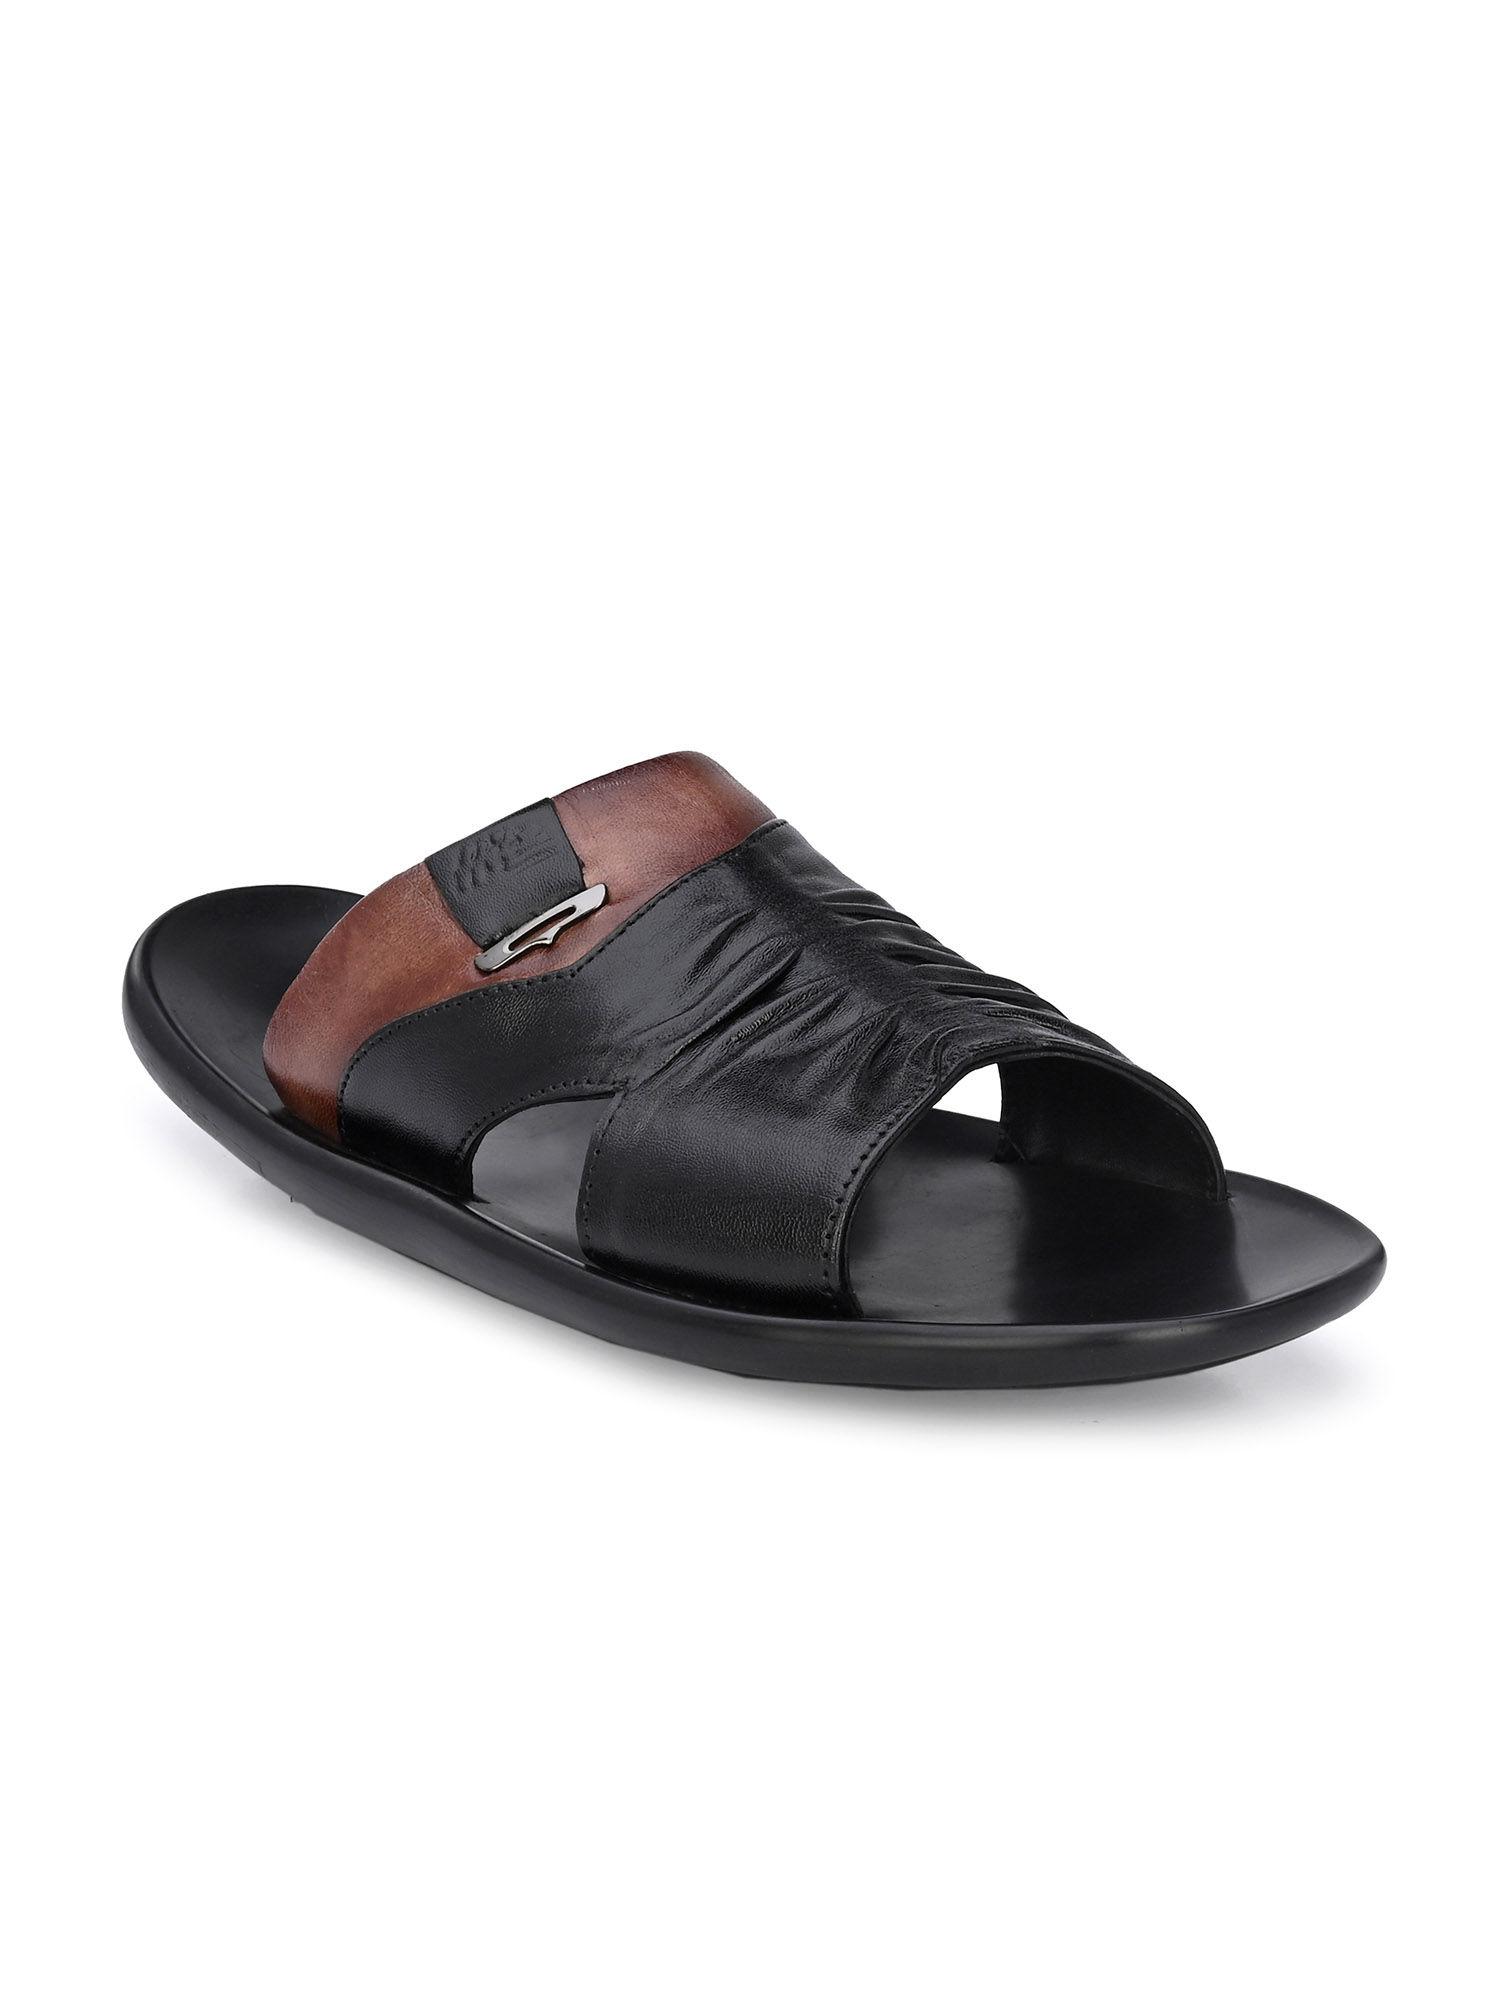 men's black leather open toe slippers